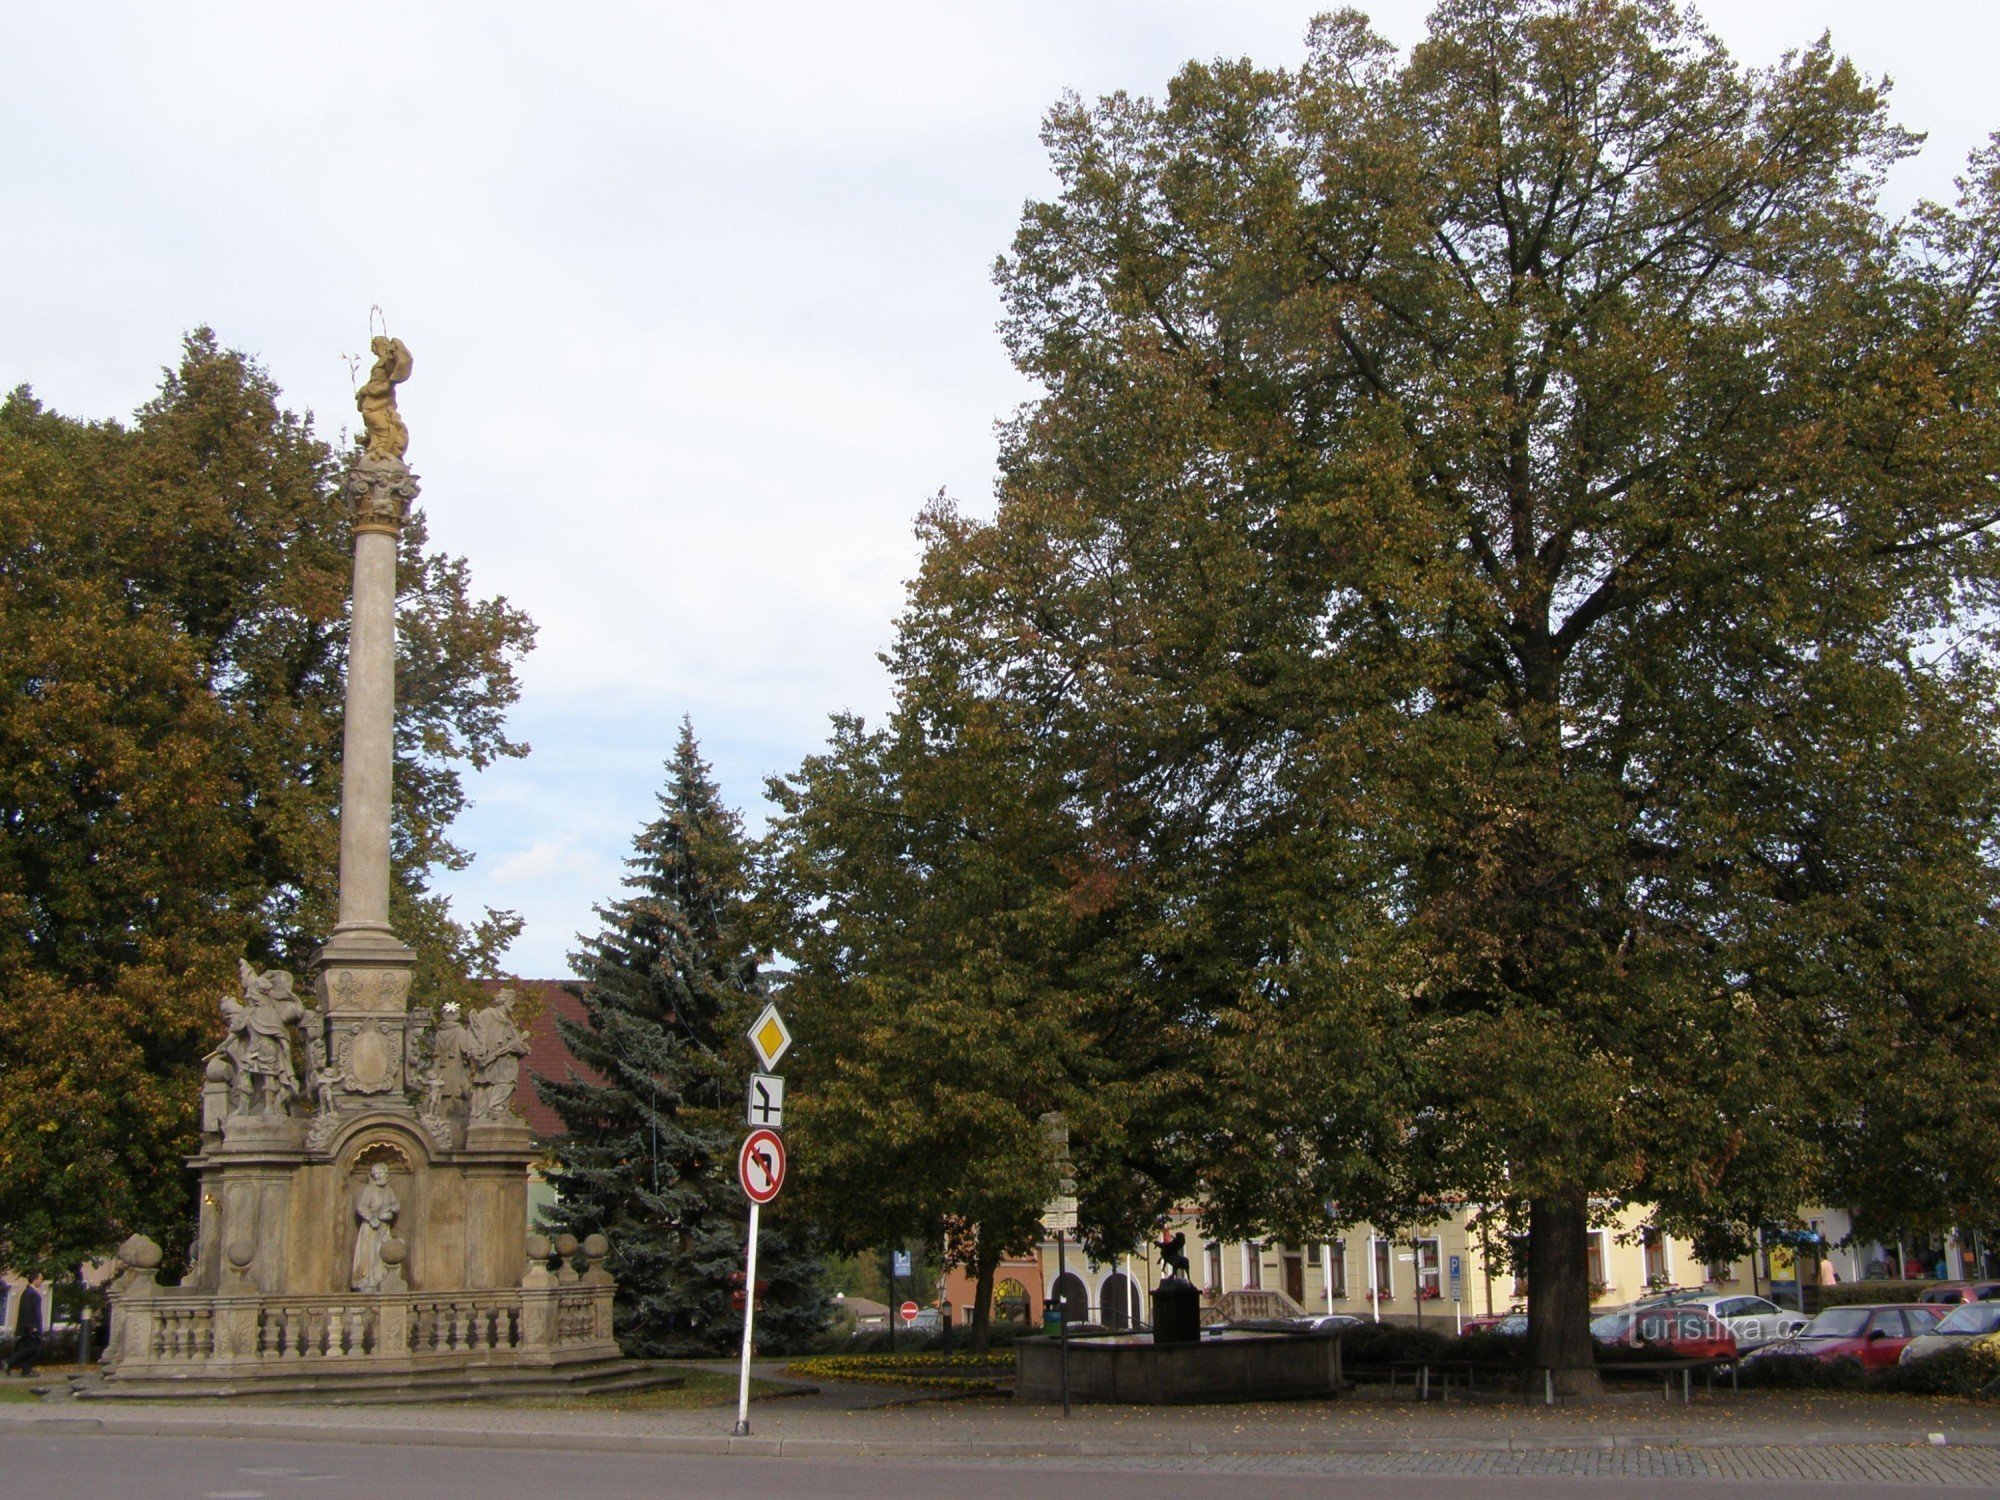 Žamberk - the main tourist signpost